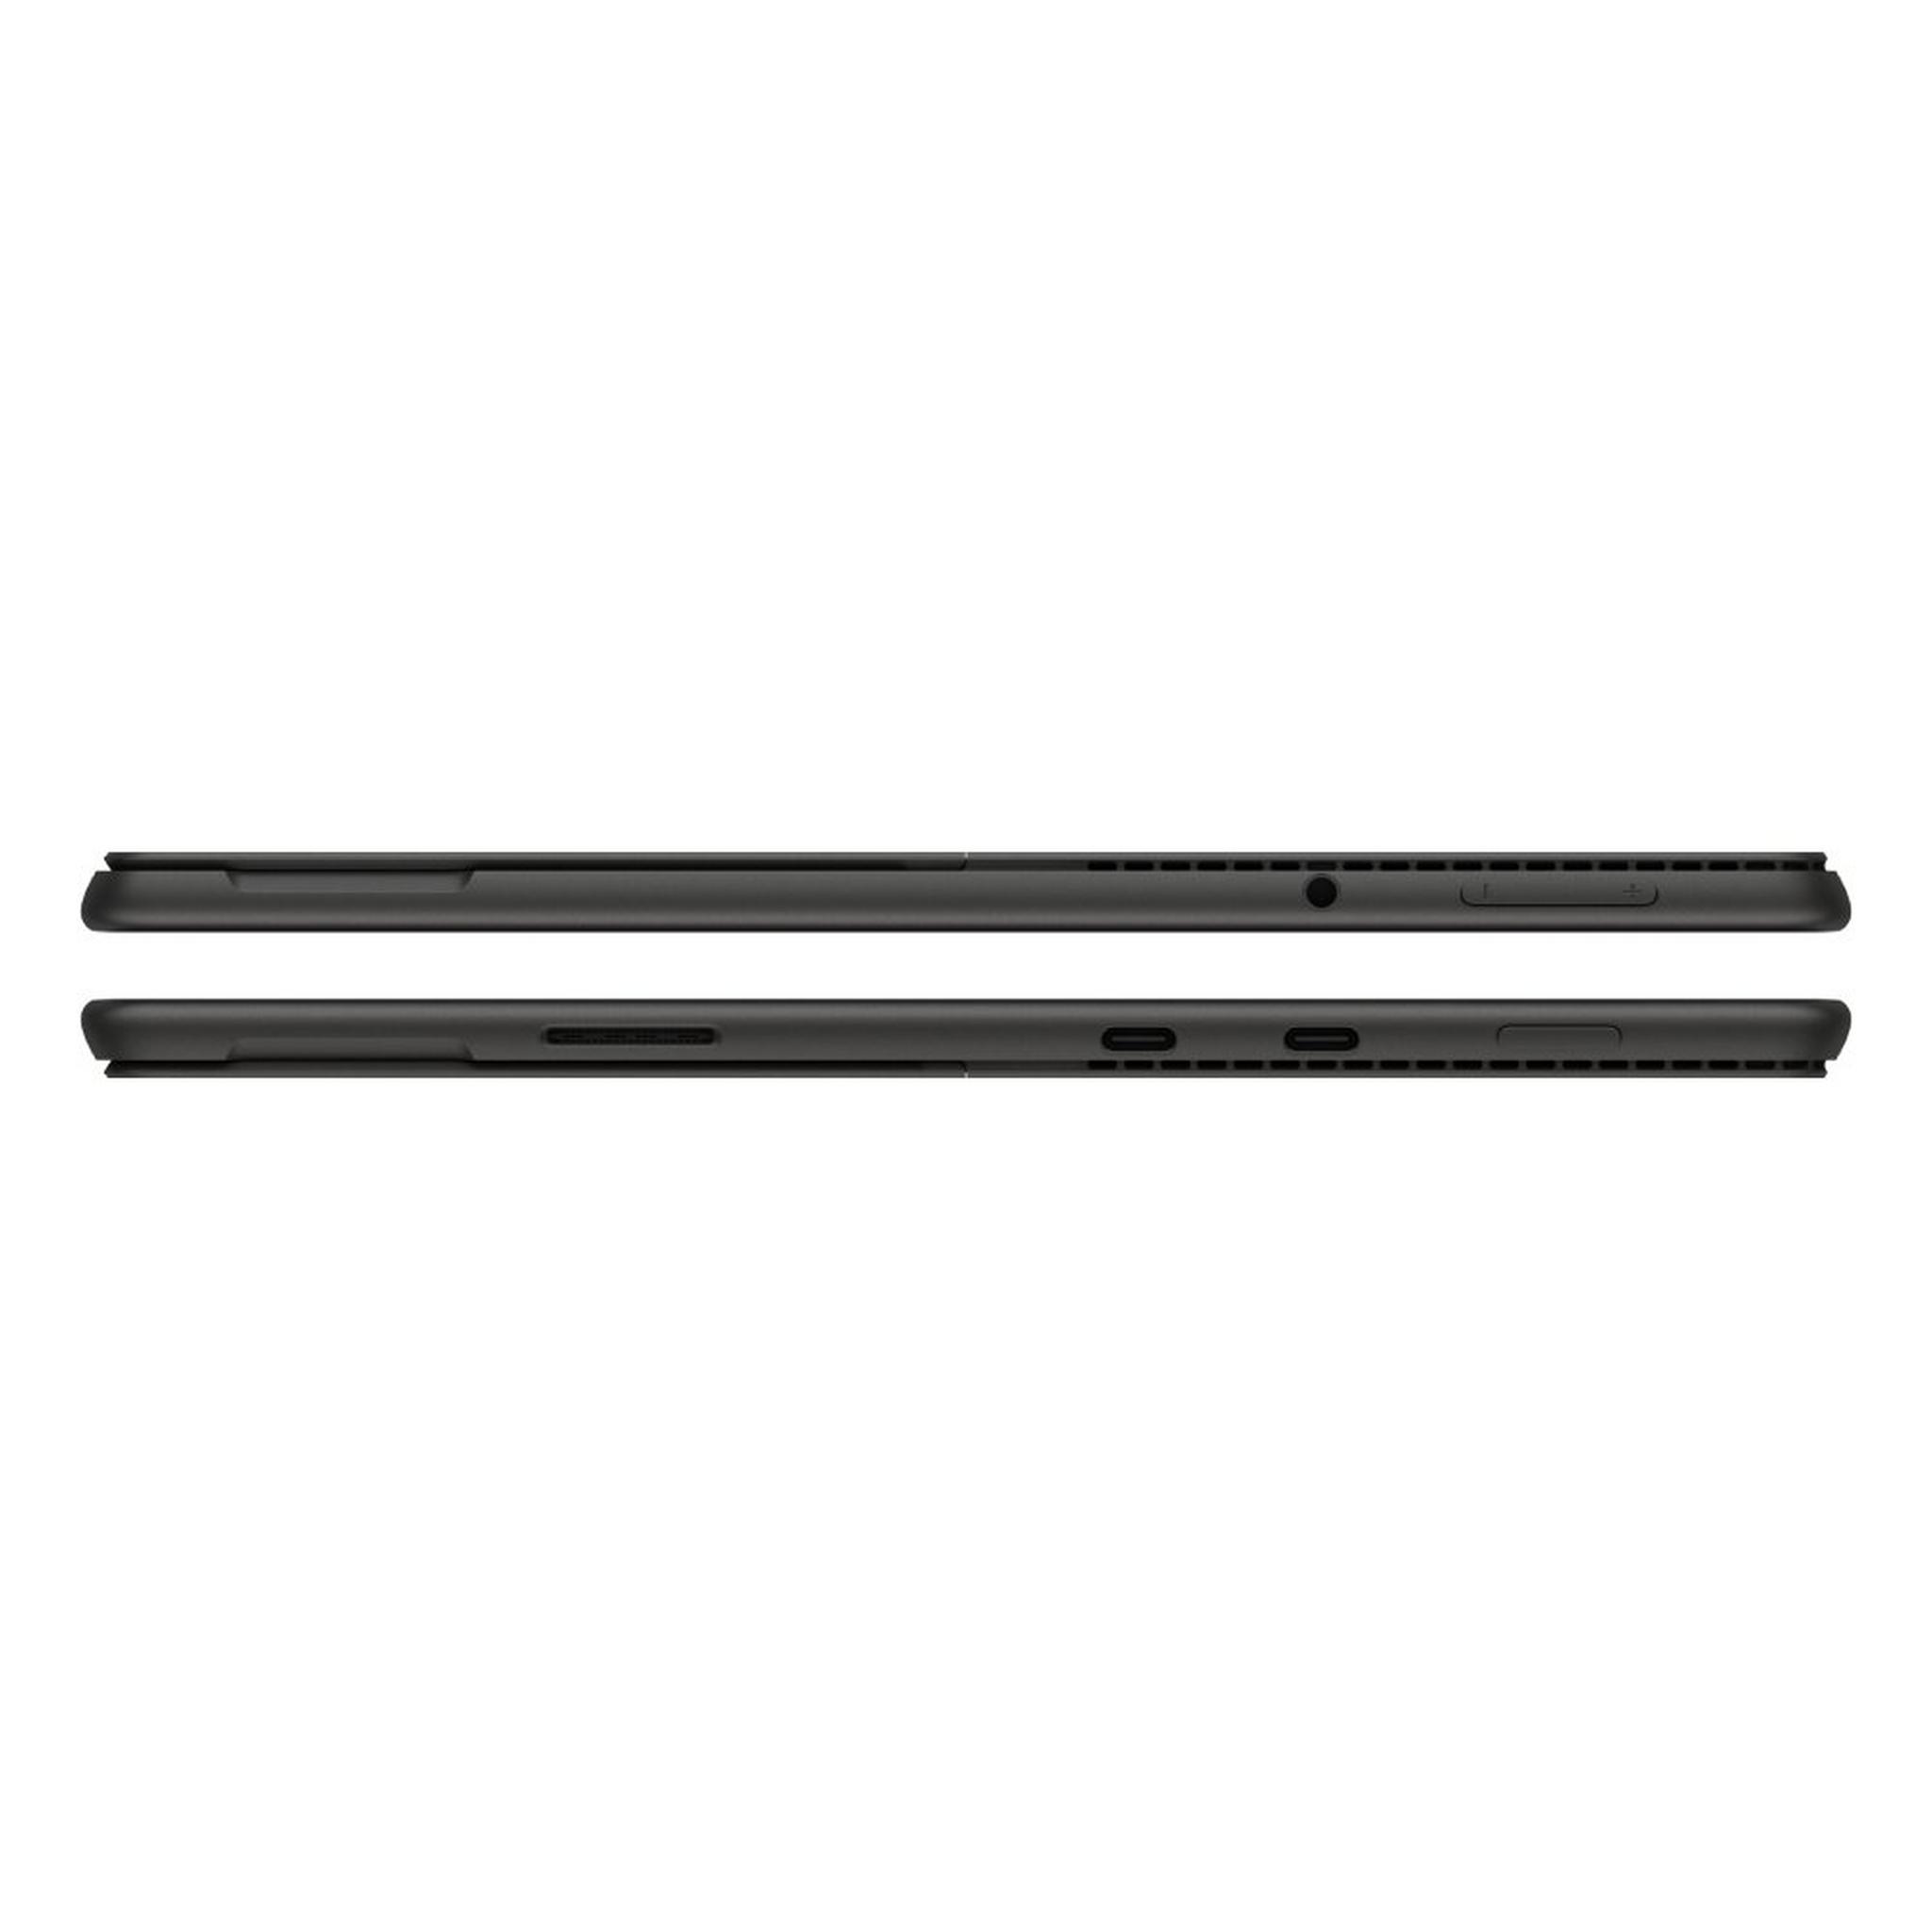 Microsoft Surface Pro 8 Intel Core i5 11th Gen, 8GB RAM, 256GB SSD, 13-inch Convertible Laptop - Graphite